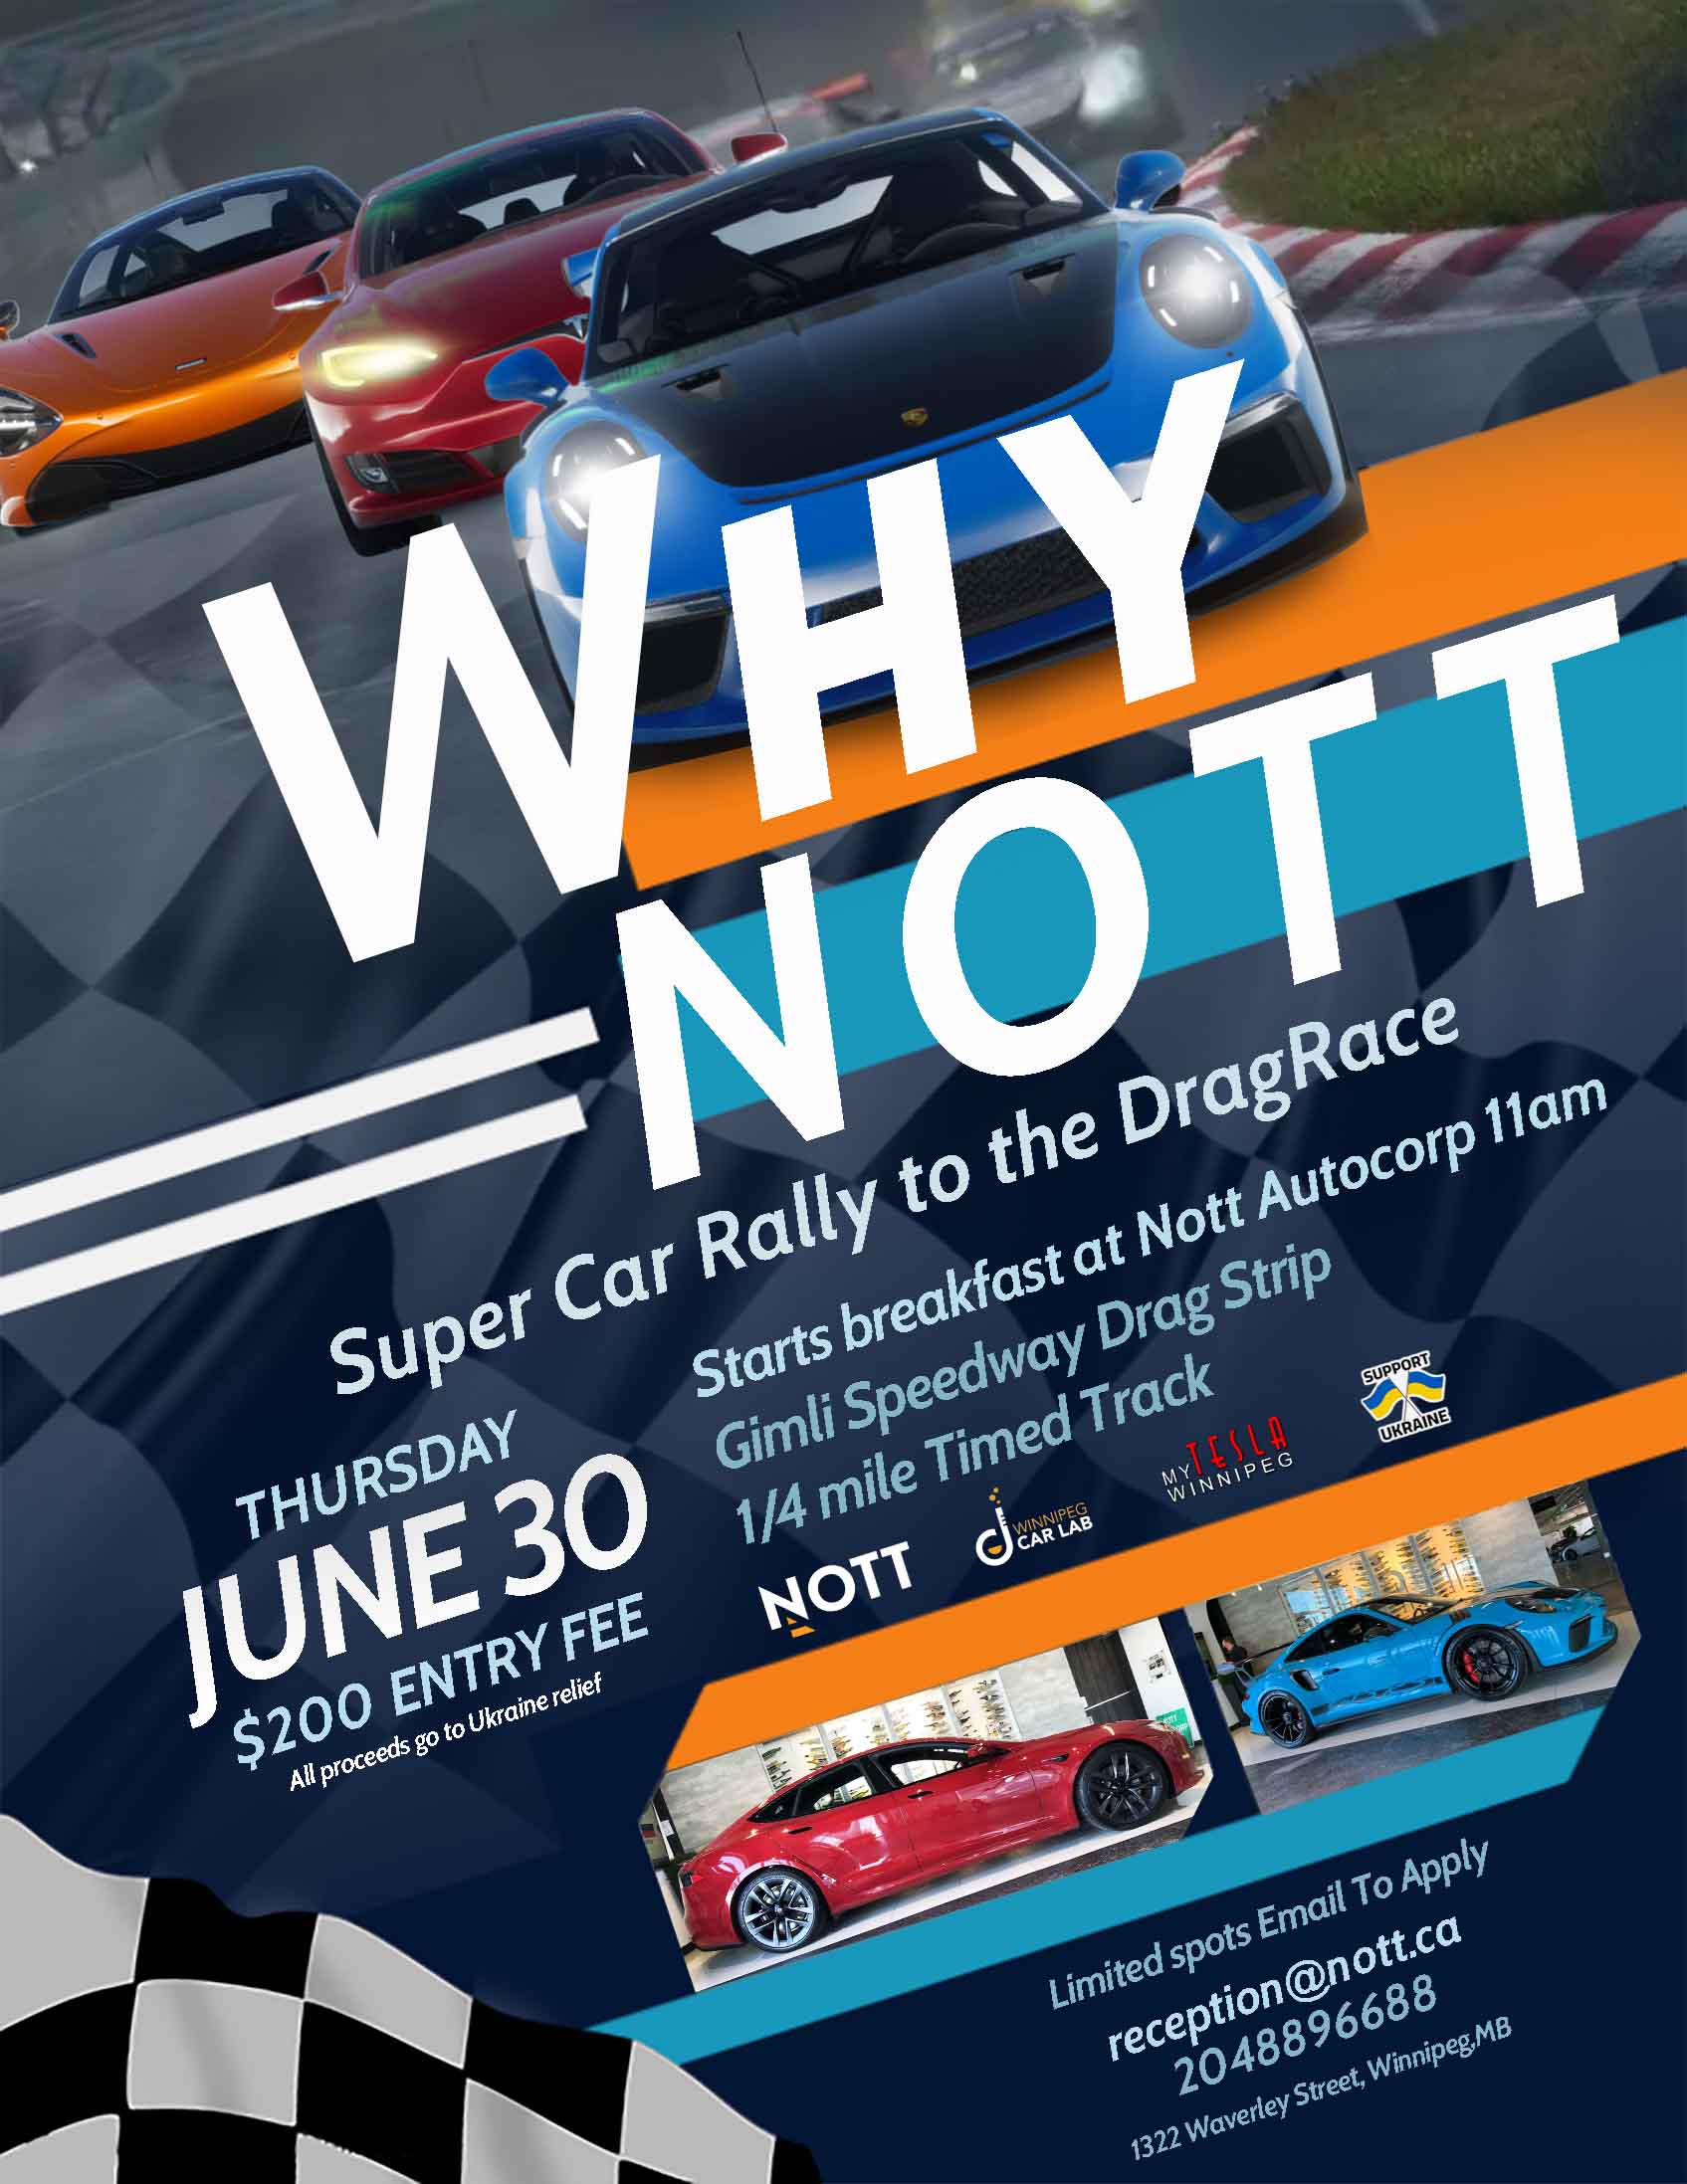 Nott Autocrop Car Rally